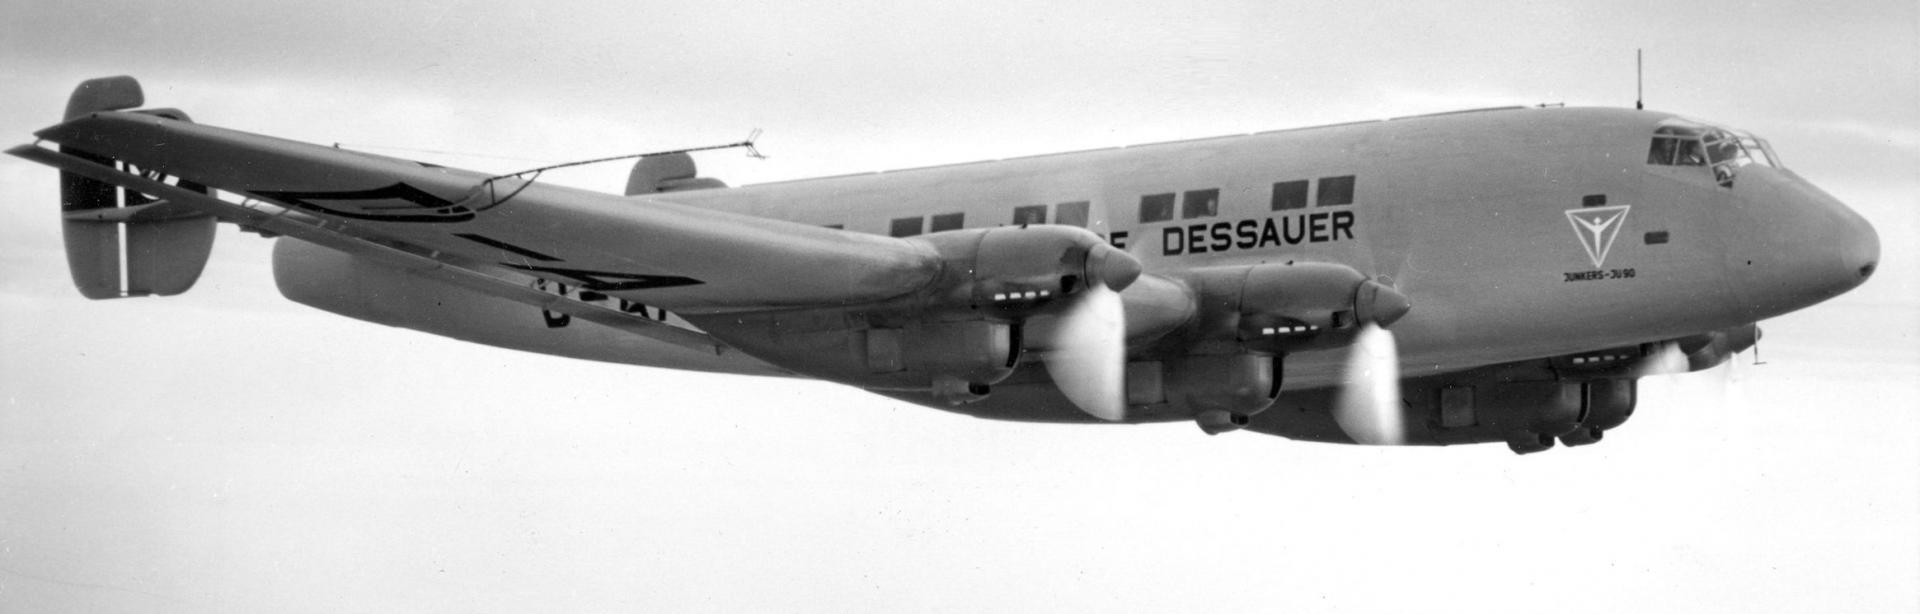 avions de transport - transport aircrafts - WWII